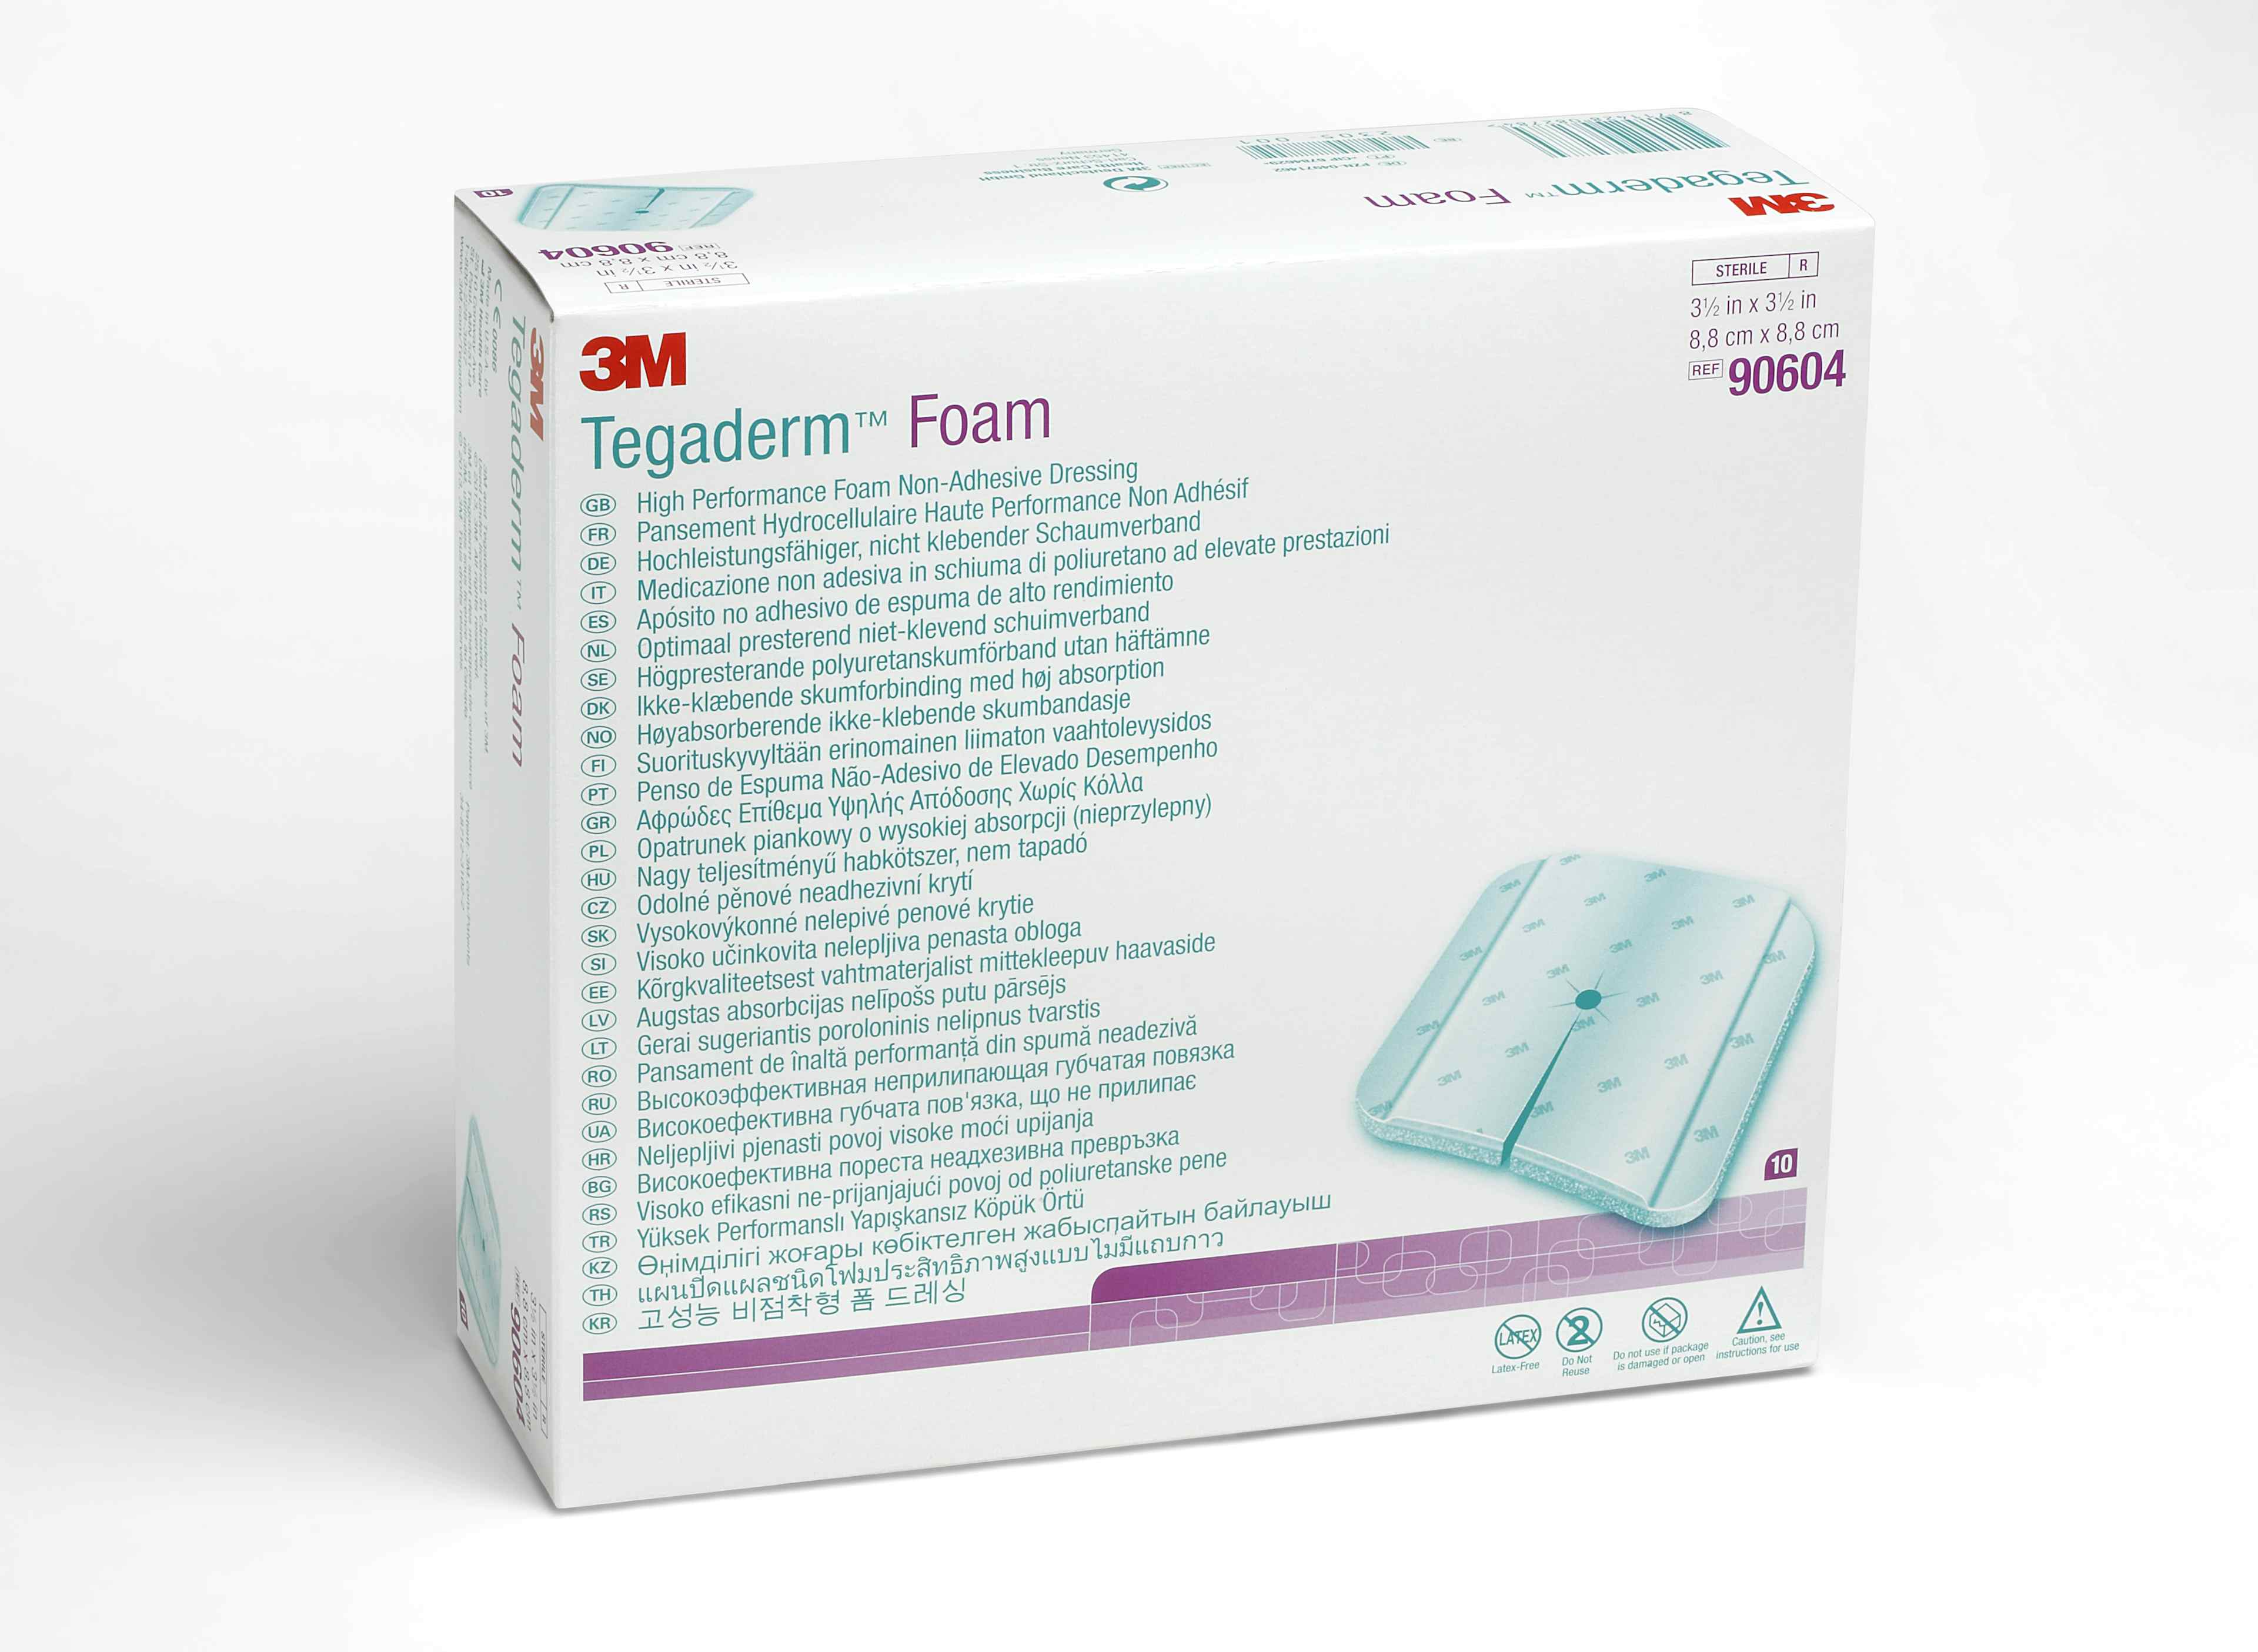 3M Tegaderm Foam High Performance Foam Non-Adhesive Dressing, 3.5 X 3.5", 90604, Box of 10